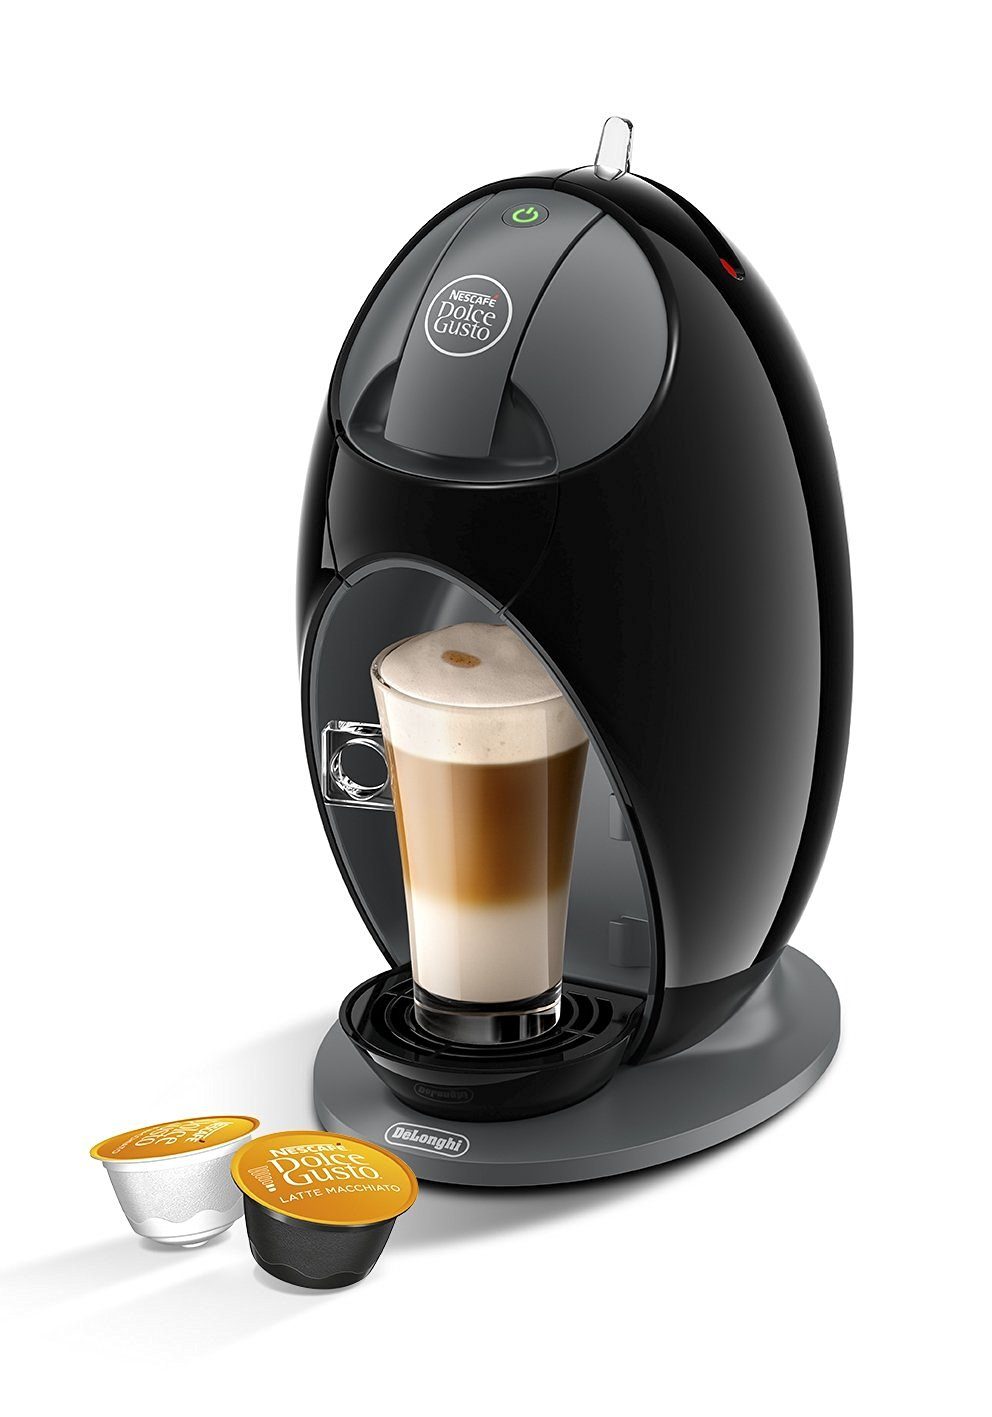 Underholdning emulering Efterforskning Nescafé Dolce Gusto Coffee Machine UK Review 2023